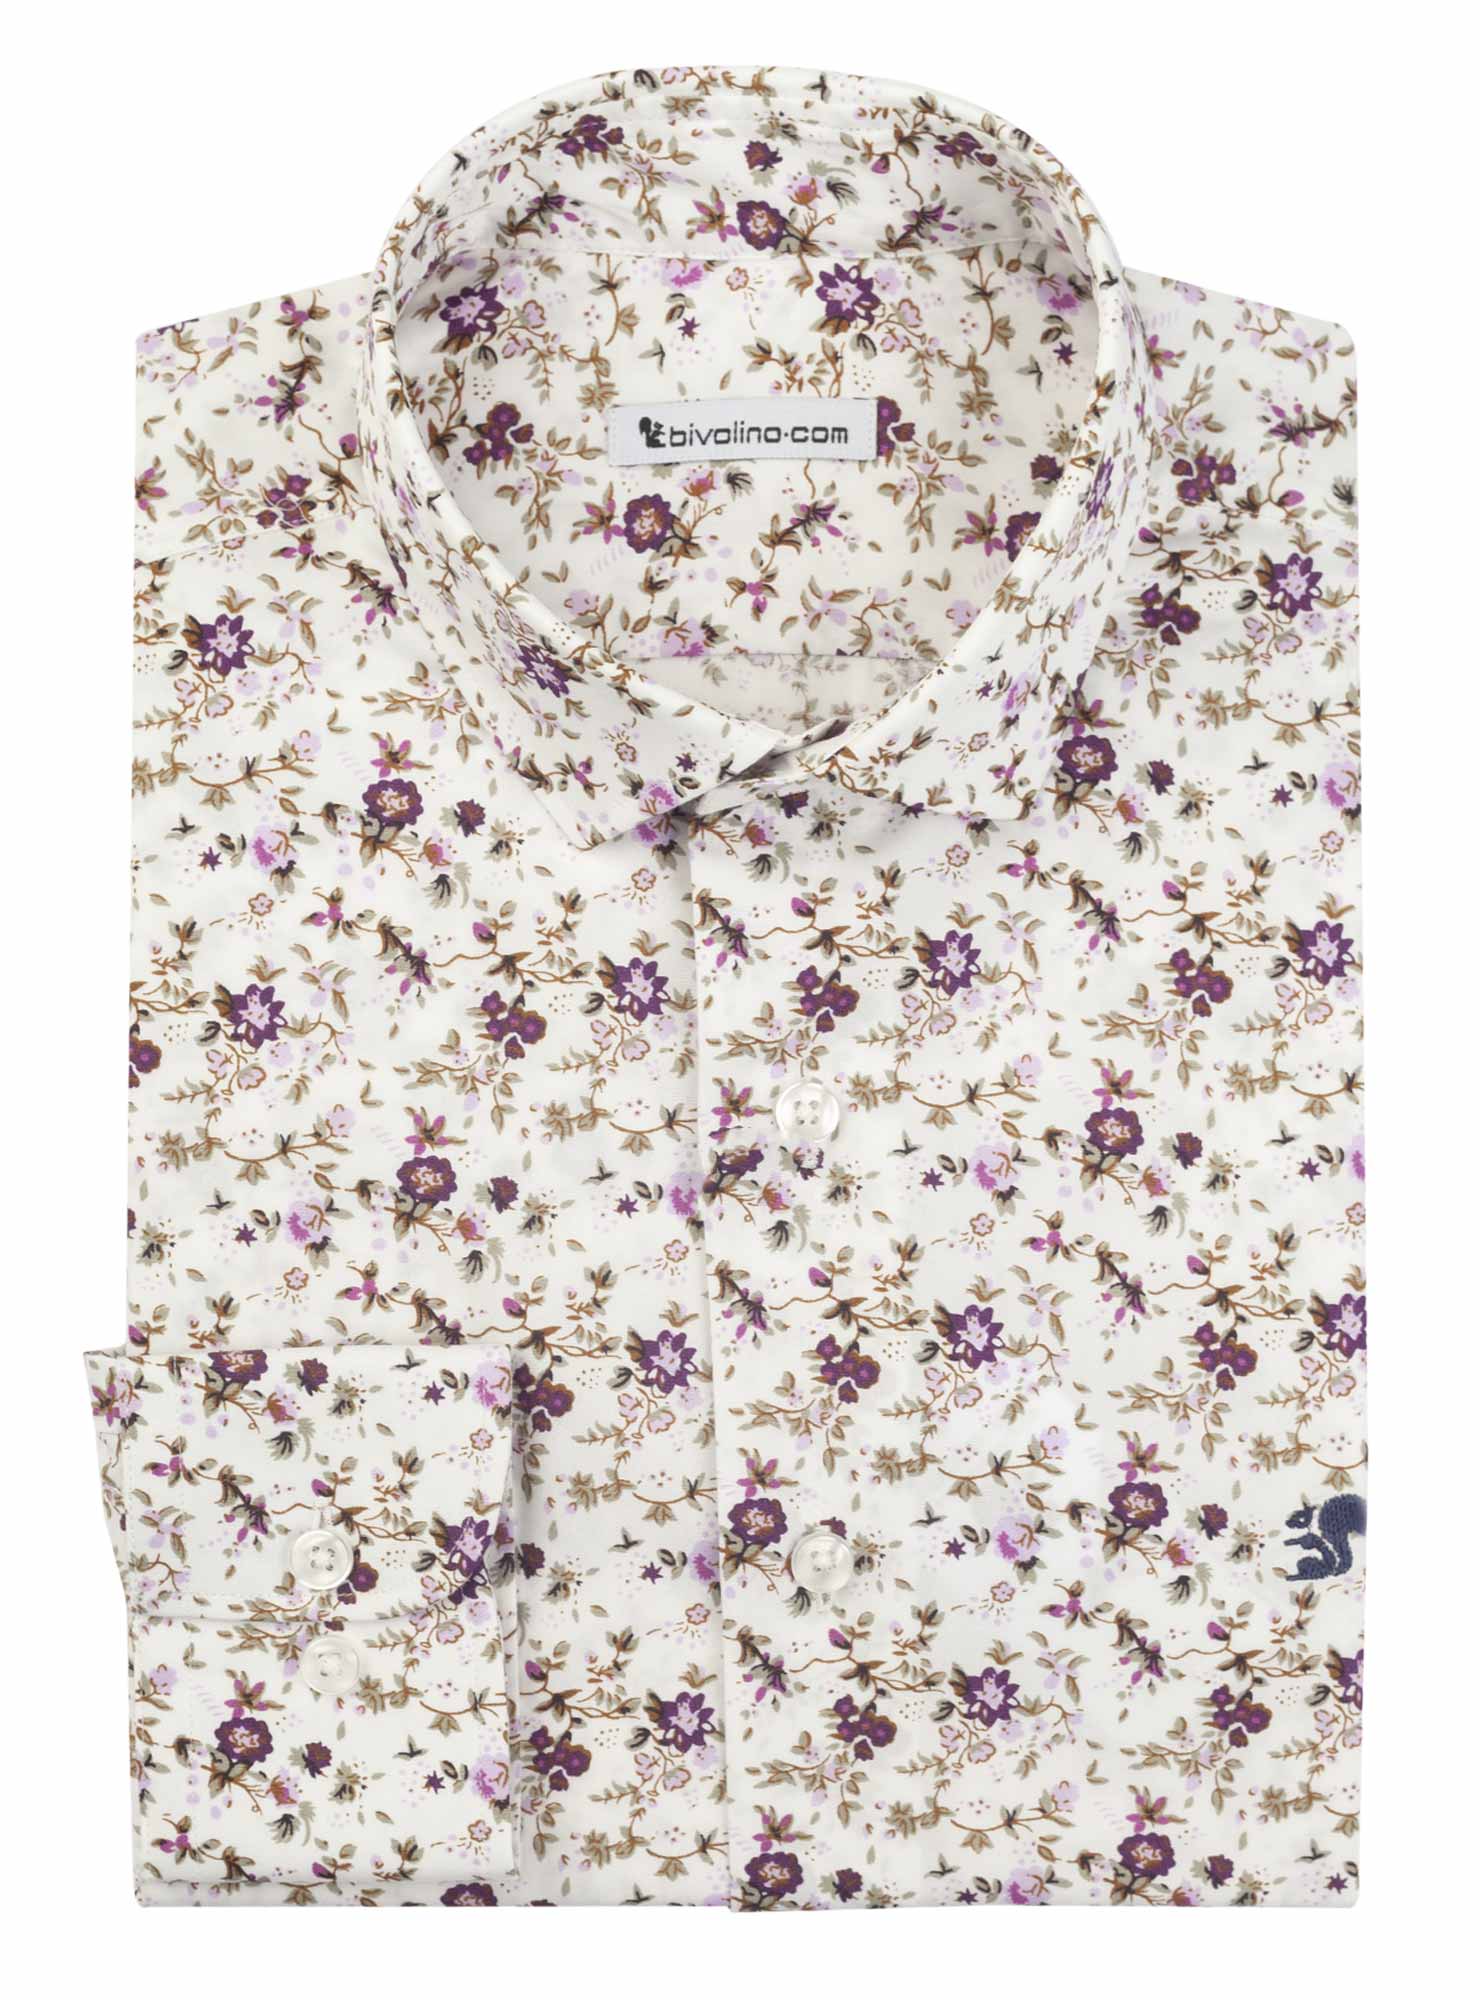 NOVARA - Poplin printed flowers tailored men shirt - San Francisco 1